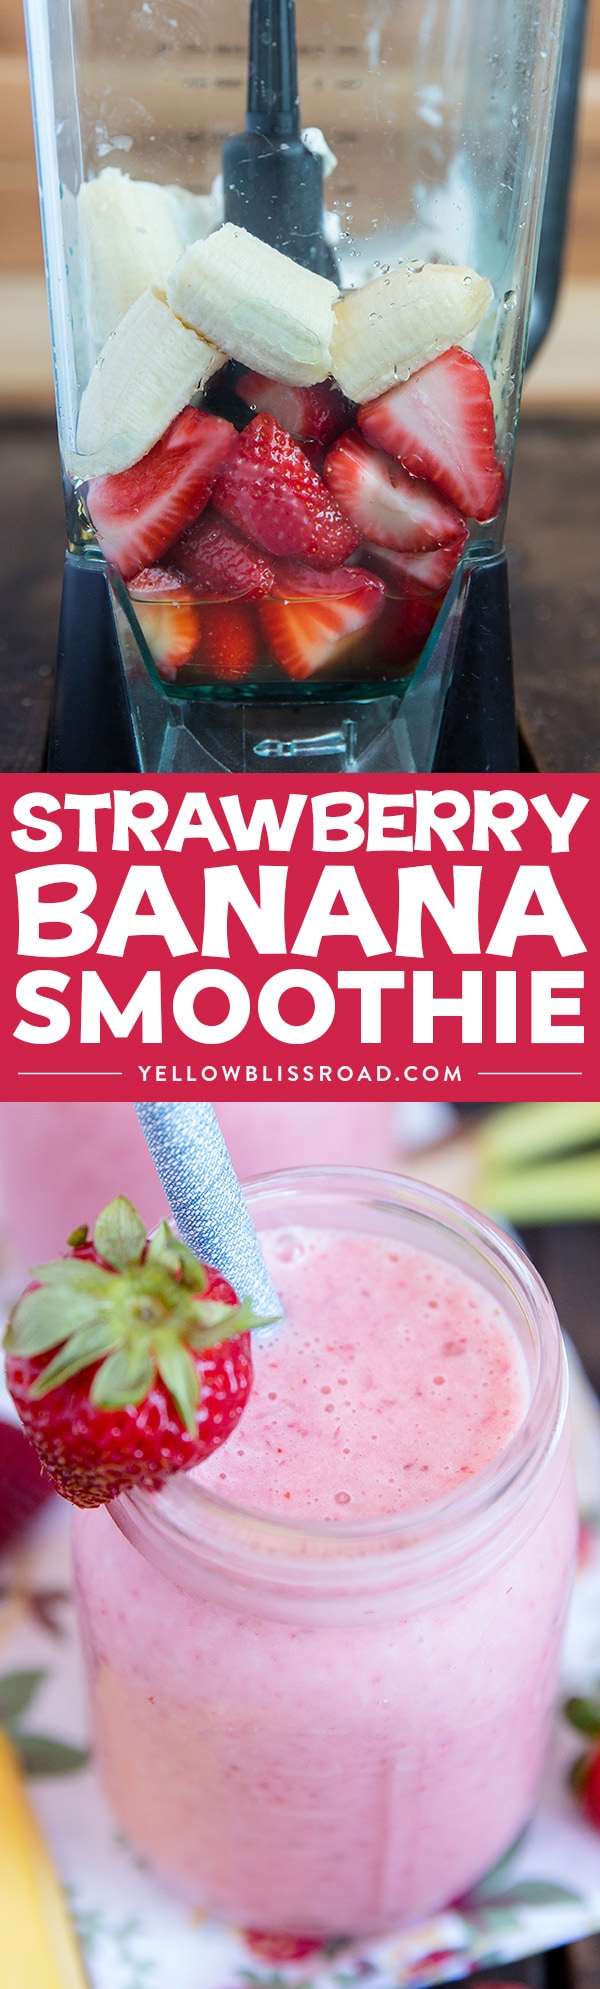 Strawberry Banana Smoothie Recipe | Easy, Healthy, Delicious